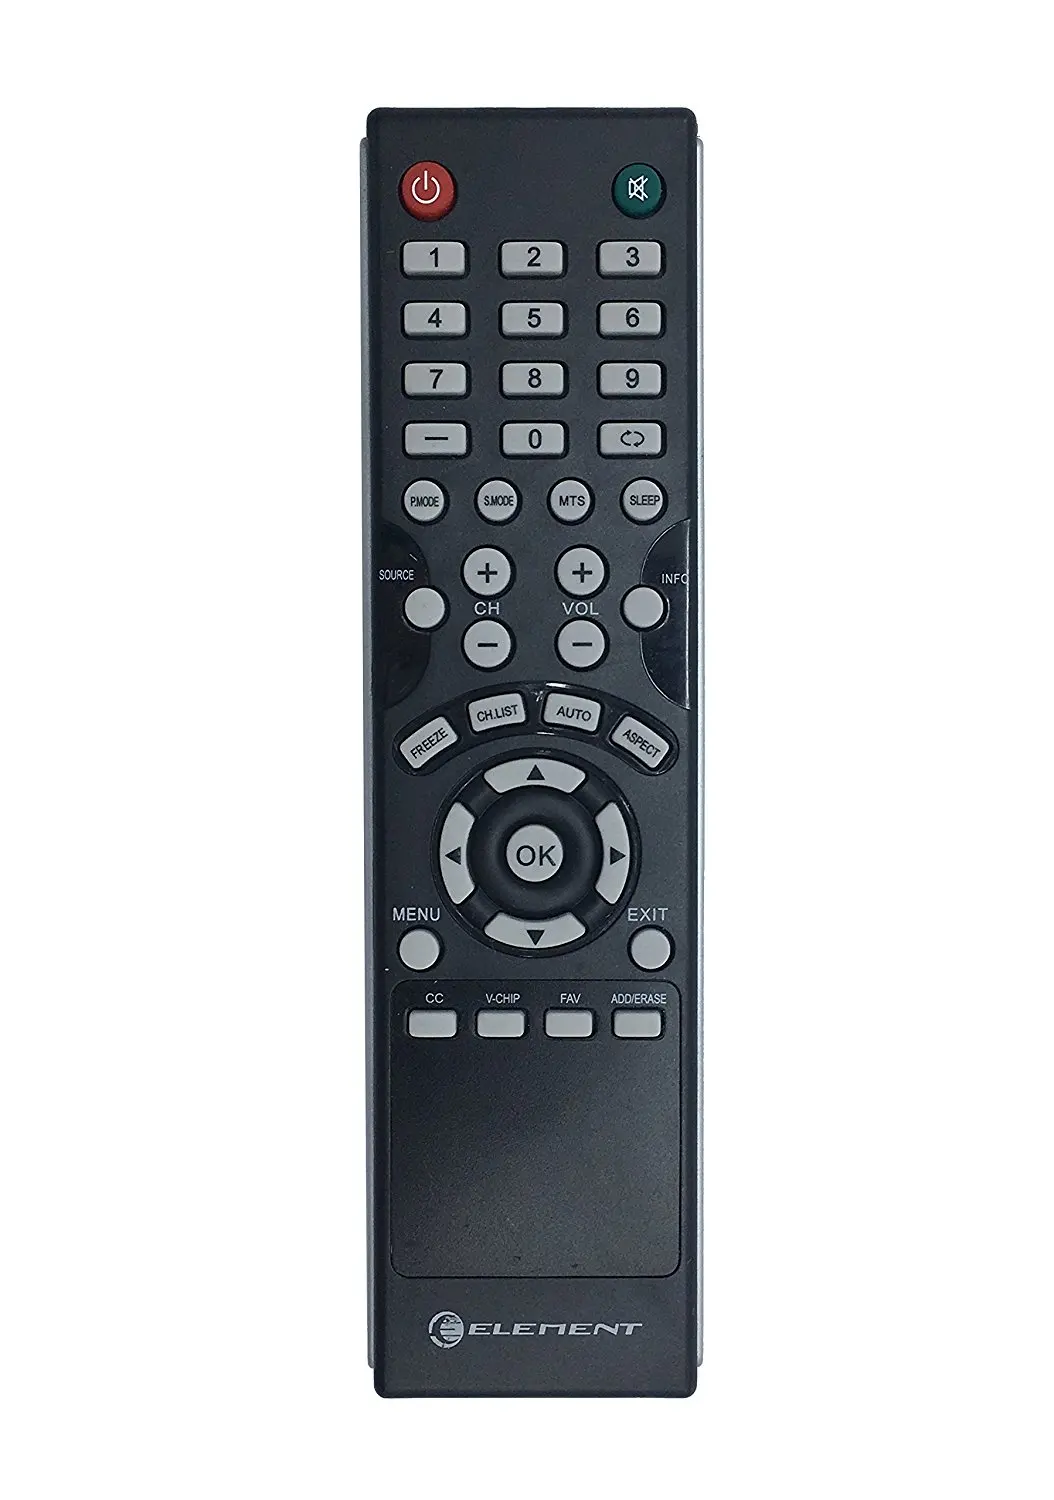 element tv remote